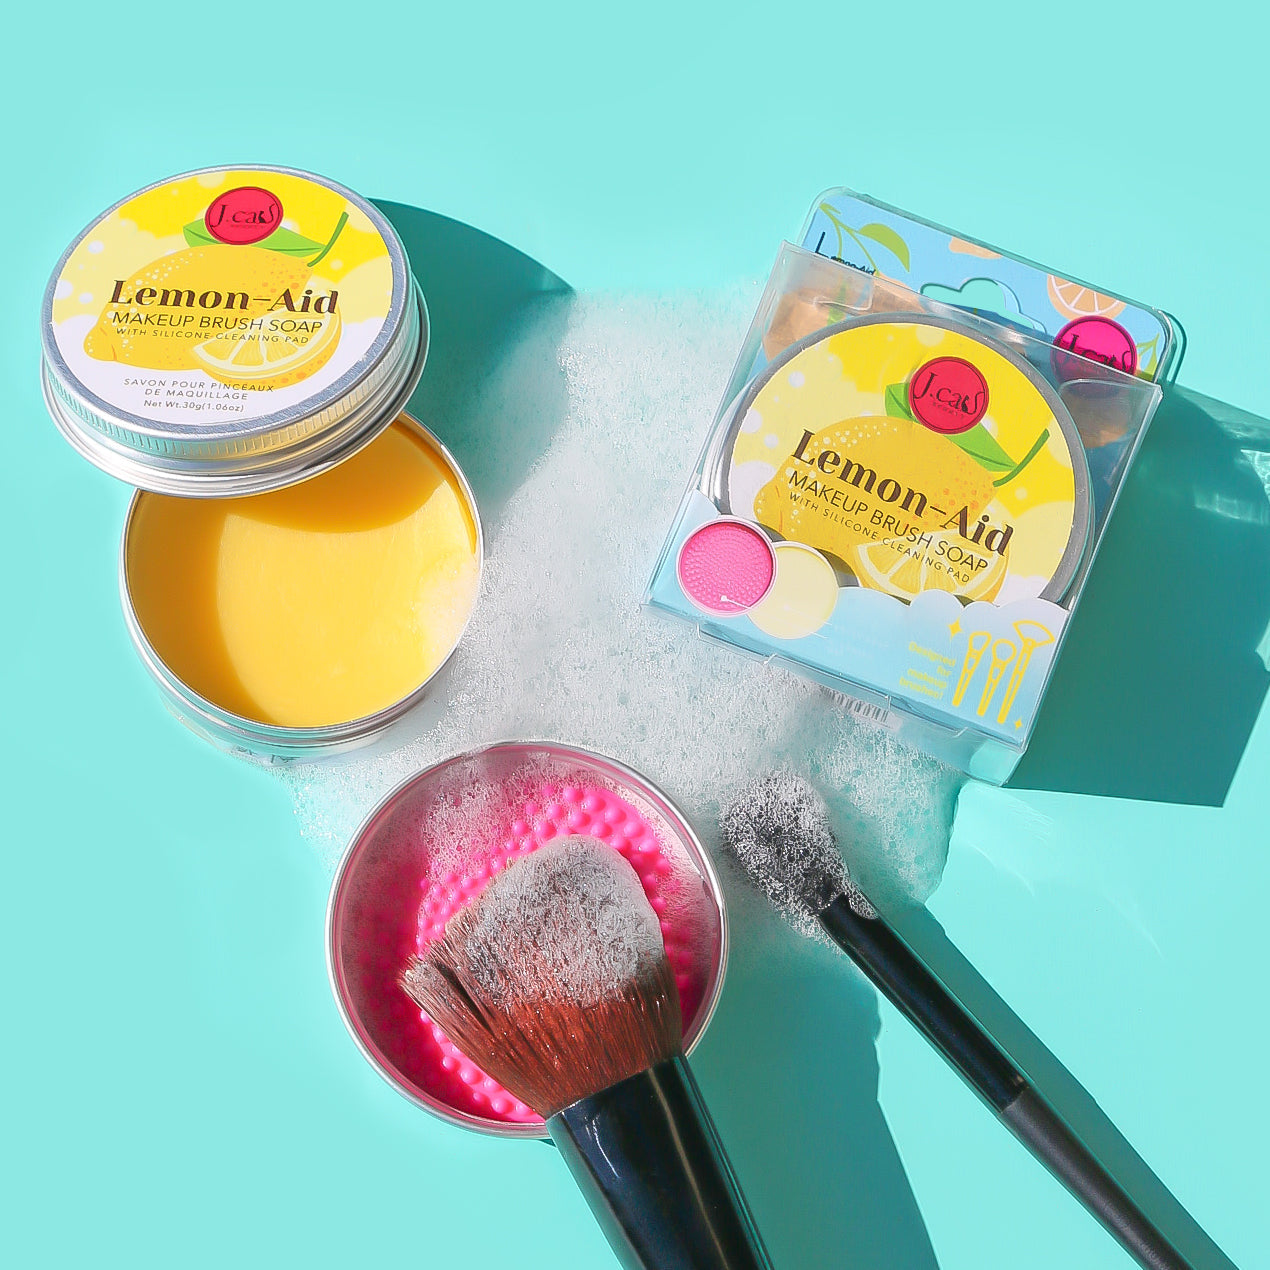 Lemon-Aid Makeup Brush Soap